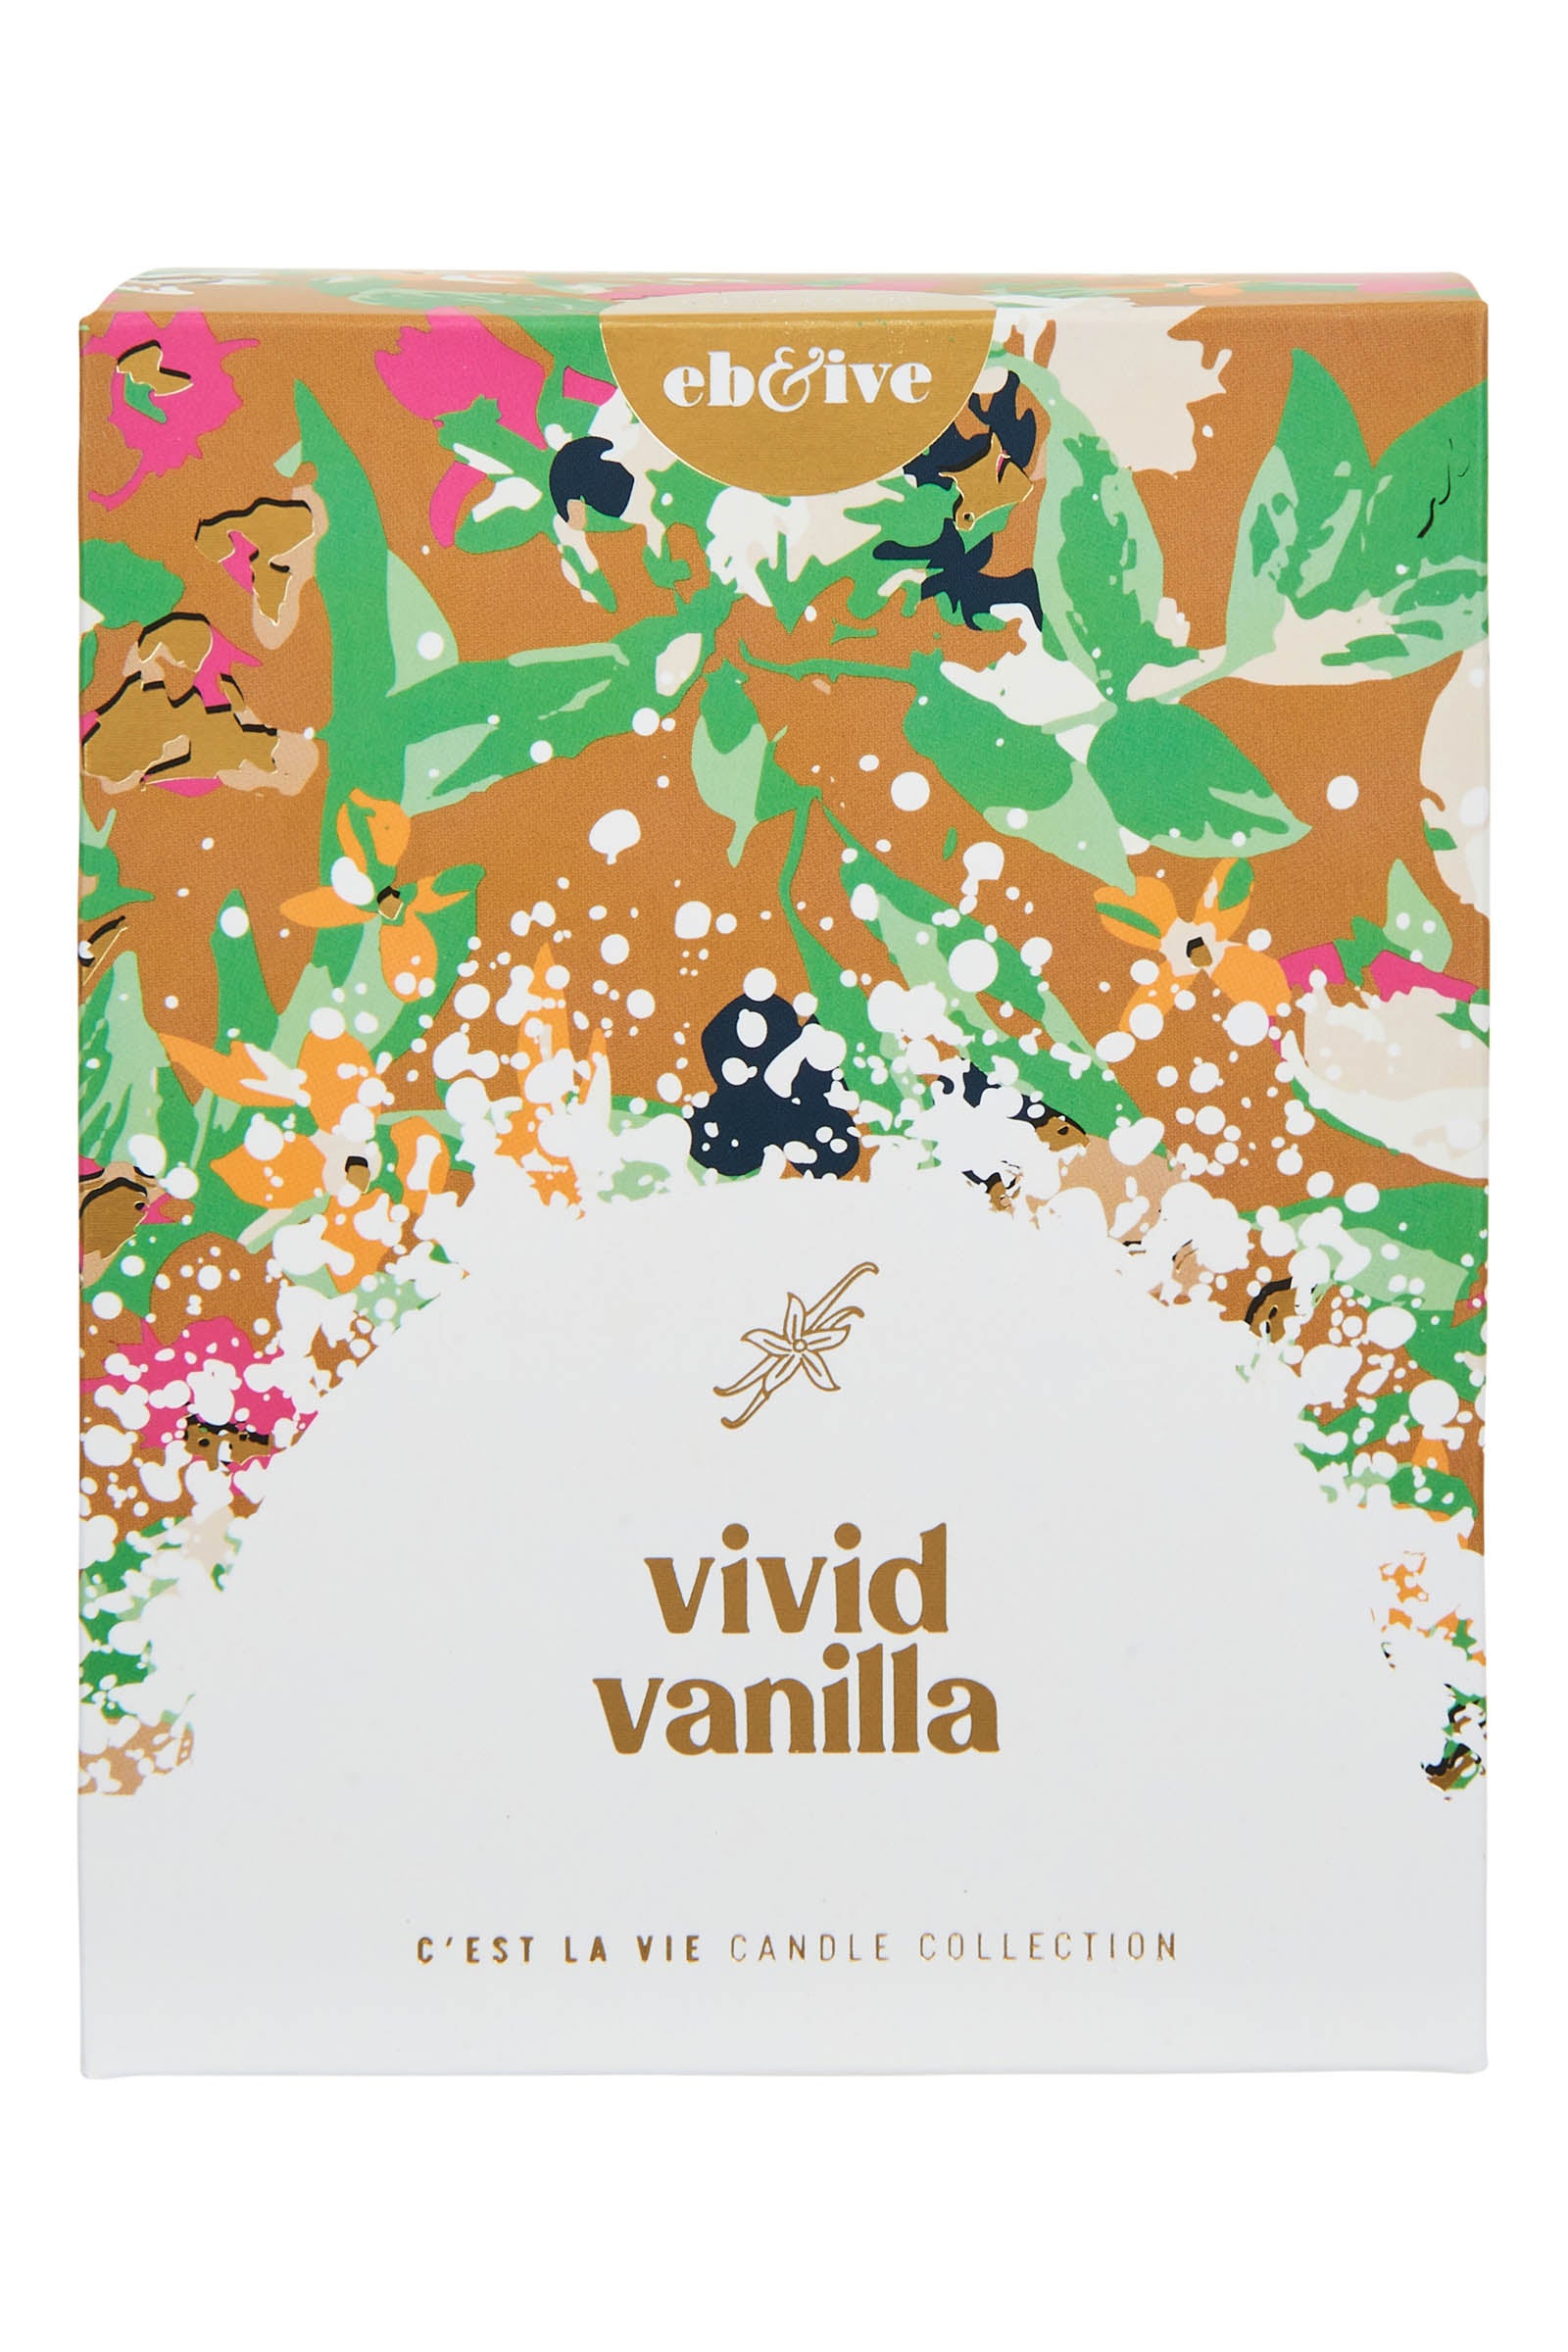 C'est La Vie Candle - Vivid Vanilla - eb&ive Candles